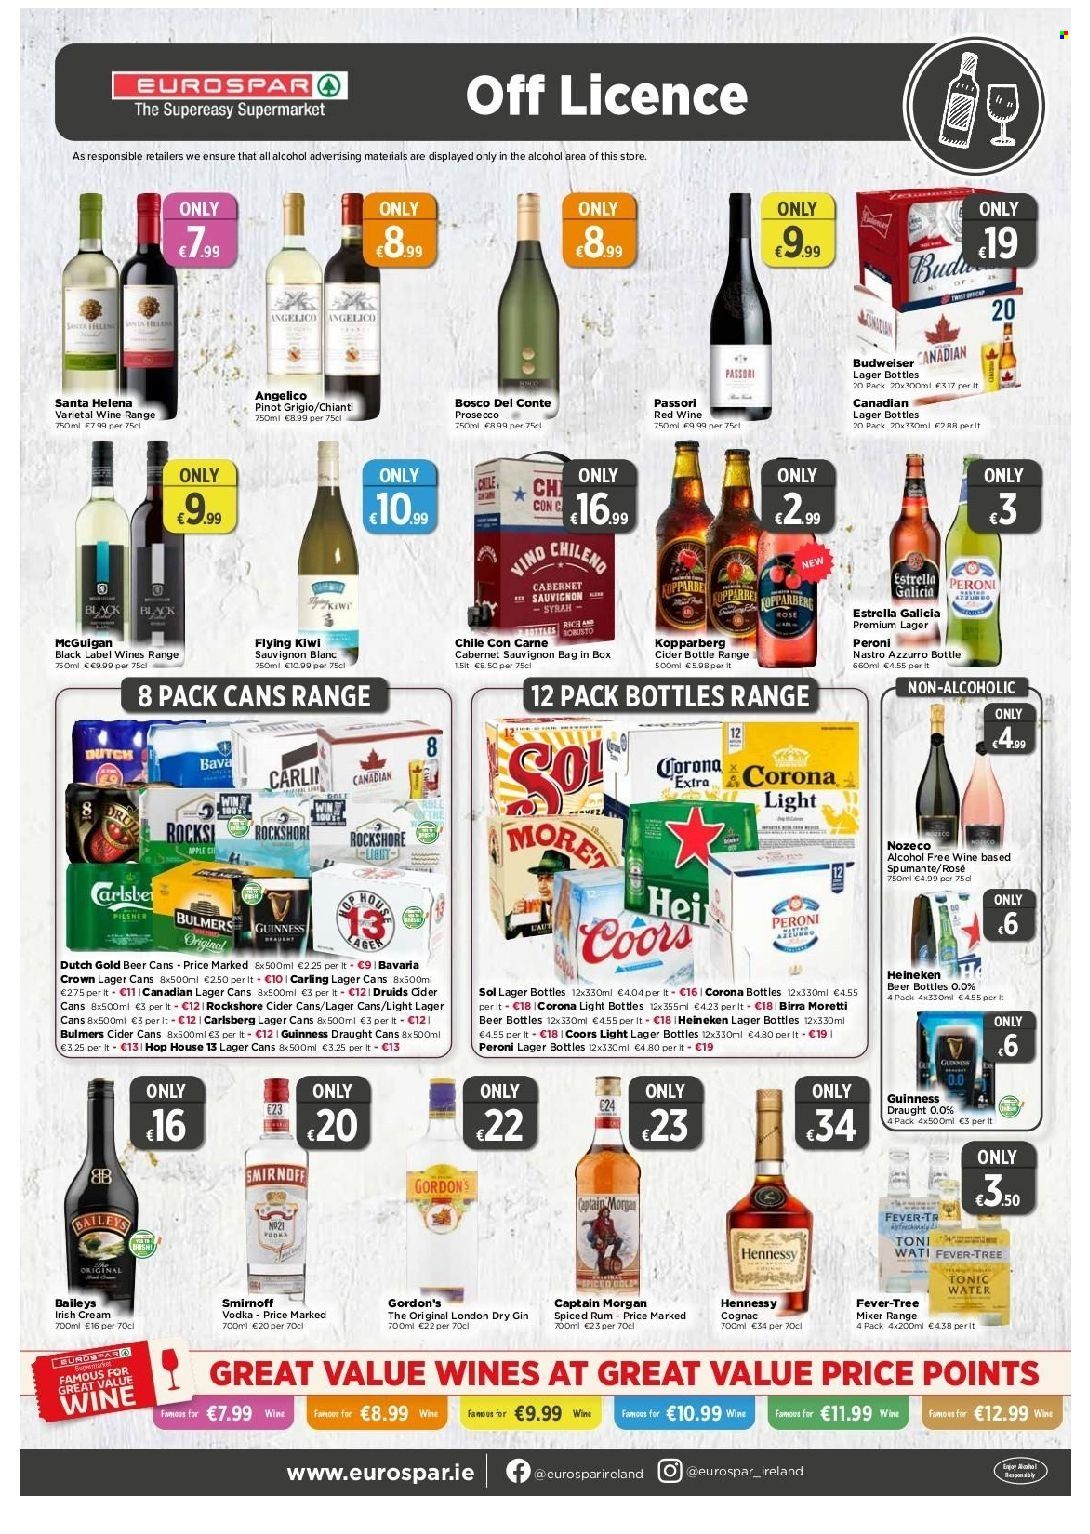 thumbnail - EUROSPAR offer  - 11.11.2021 - 01.12.2021 - Sales products - kiwi, Santa, tonic, Cabernet Sauvignon, red wine, spumante, white wine, wine, Syrah, Pinot Grigio, Sauvignon Blanc, rosé wine, Captain Morgan, cognac, gin, rum, Smirnoff, spiced rum, vodka, irish cream, Hennessy, Gordon's, Kopparberg, cider, beer, Corona Extra, Heineken, Bulmers, Carlsberg, Guinness, Peroni, Carling, Sol, Lager, Rockshore, bag, Budweiser, Coors. Page 8.